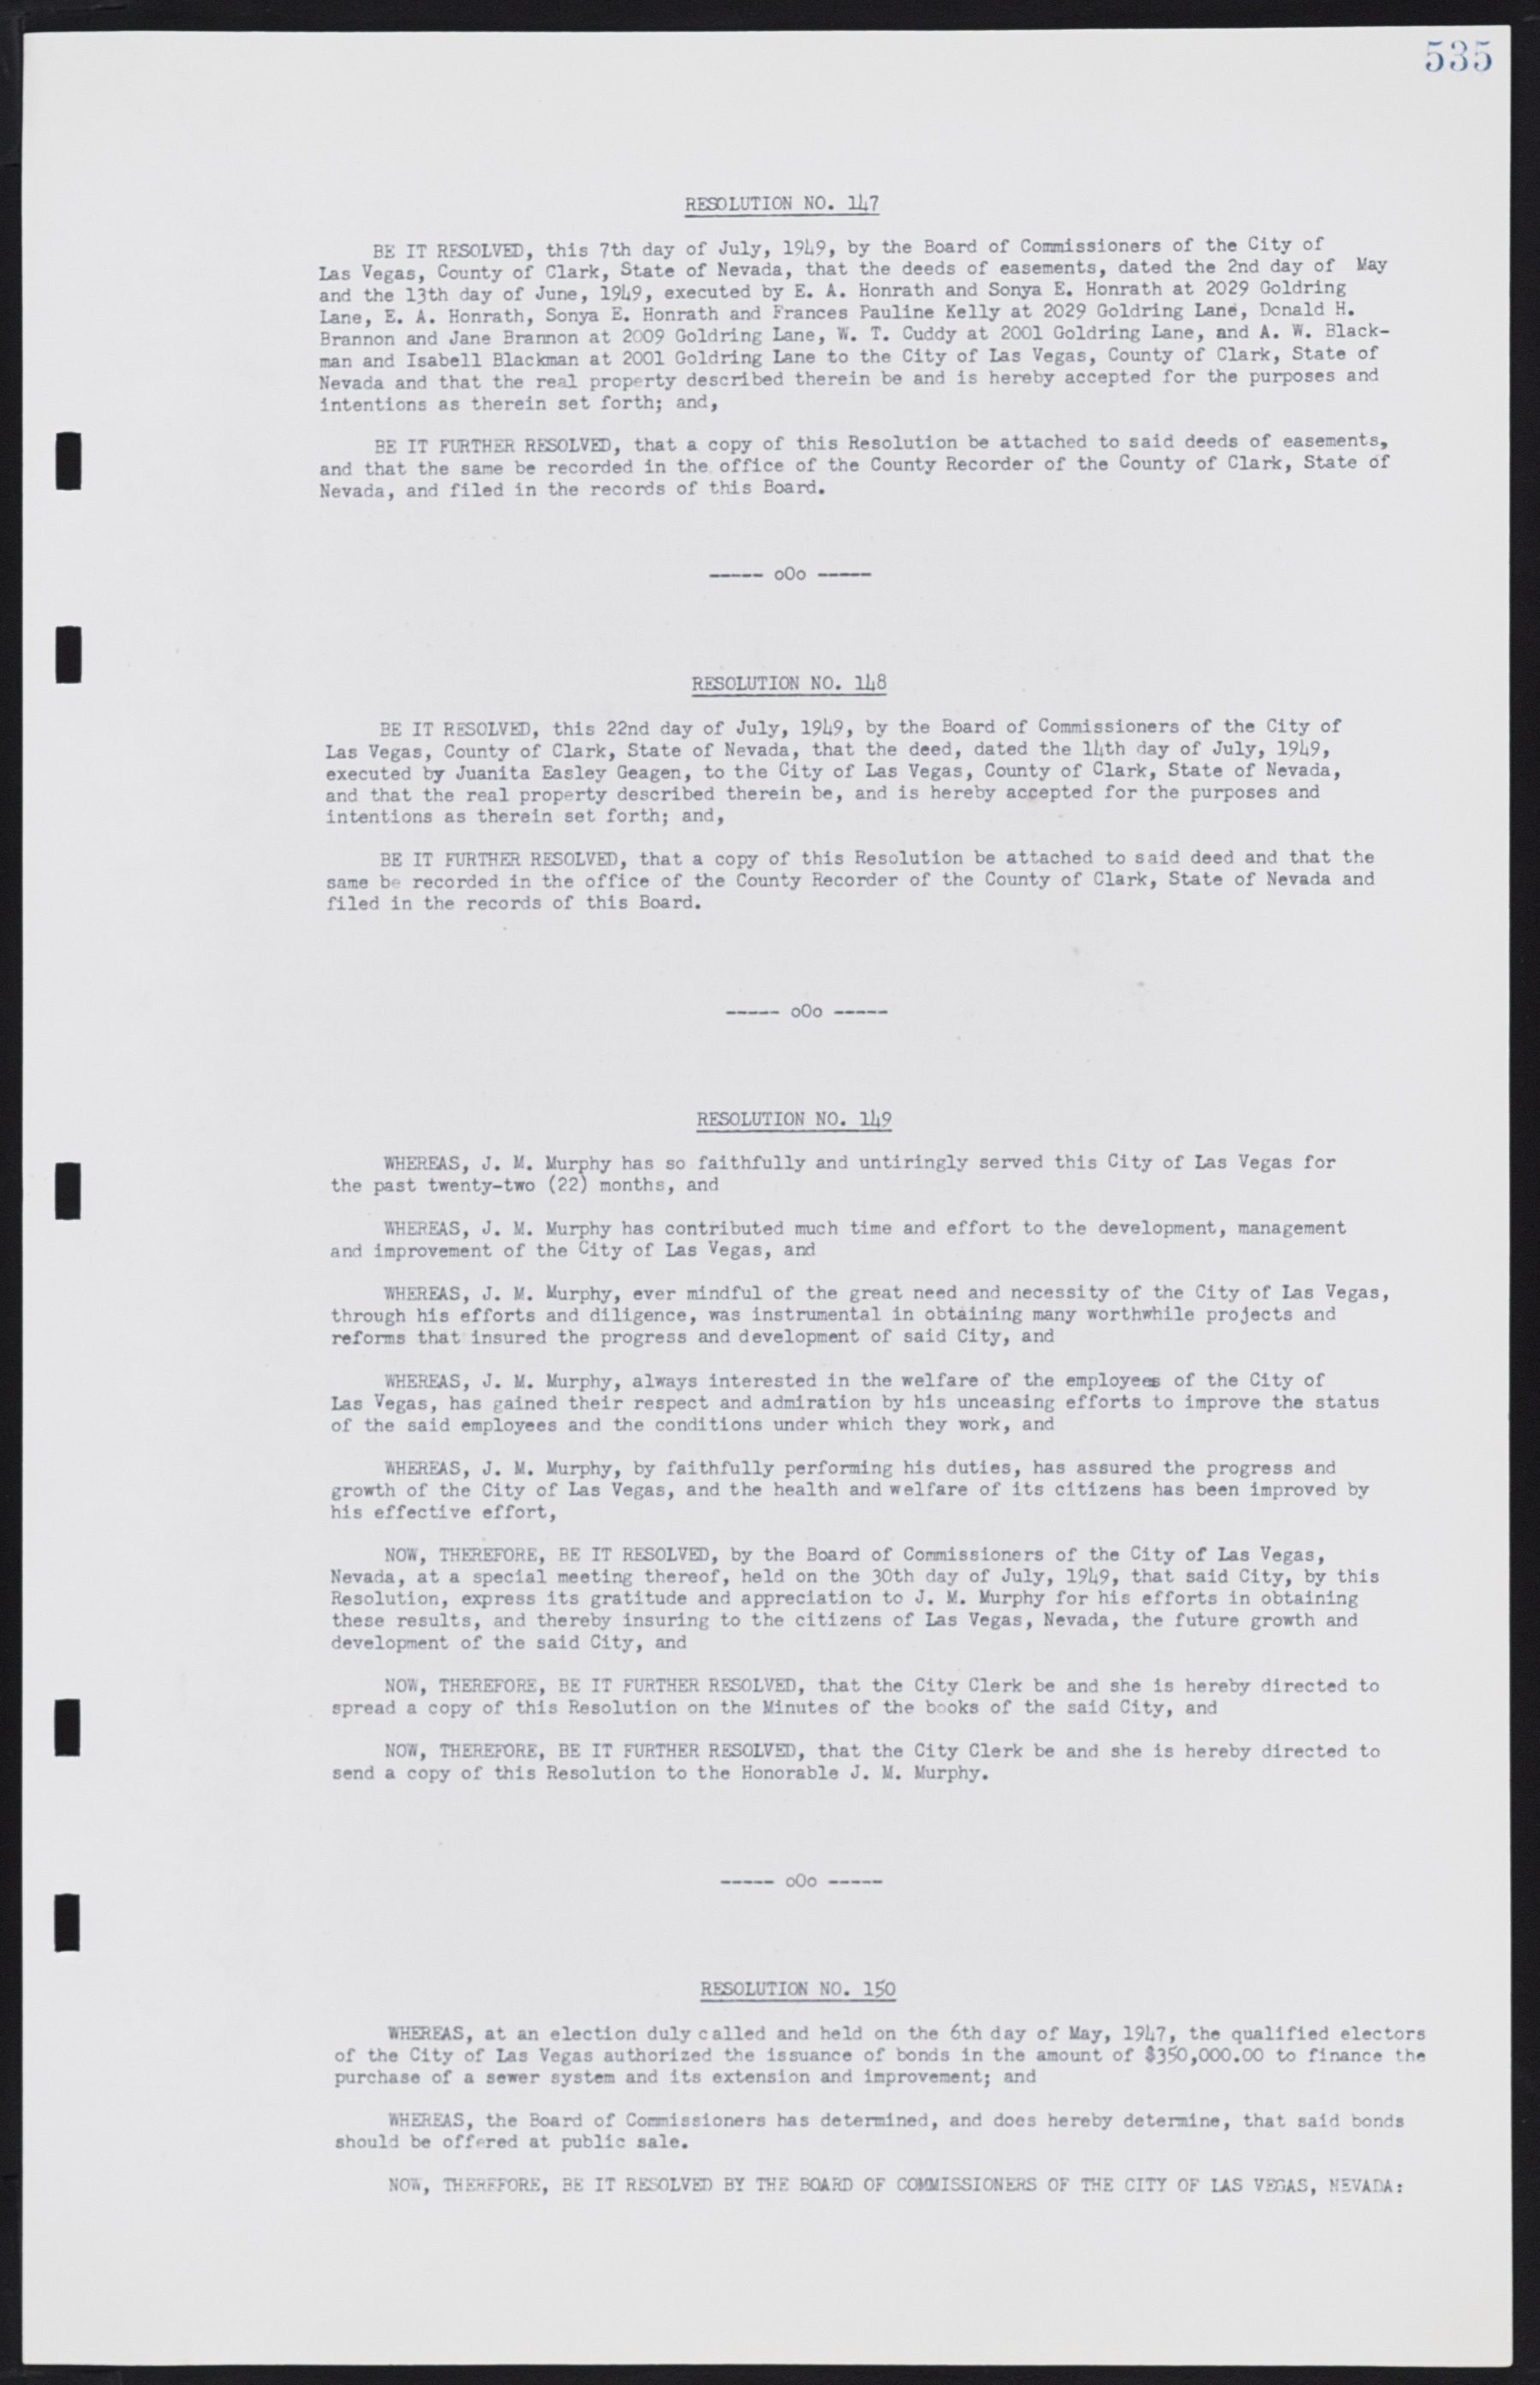 Las Vegas City Commission Minutes, January 7, 1947 to October 26, 1949, lvc000006-565